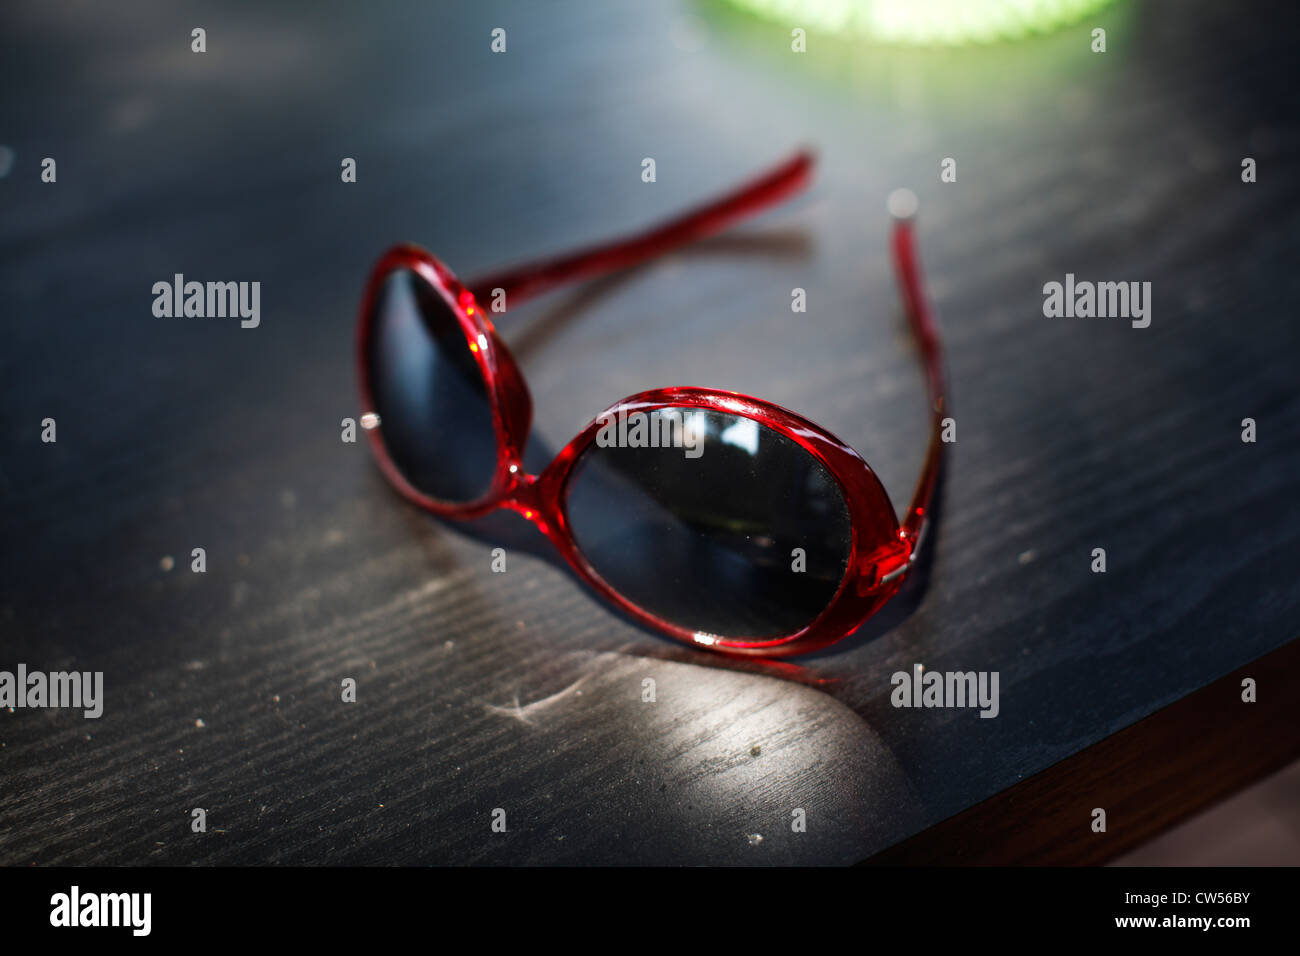 Red plastic women's sunglasses on black surface. Stock Photo